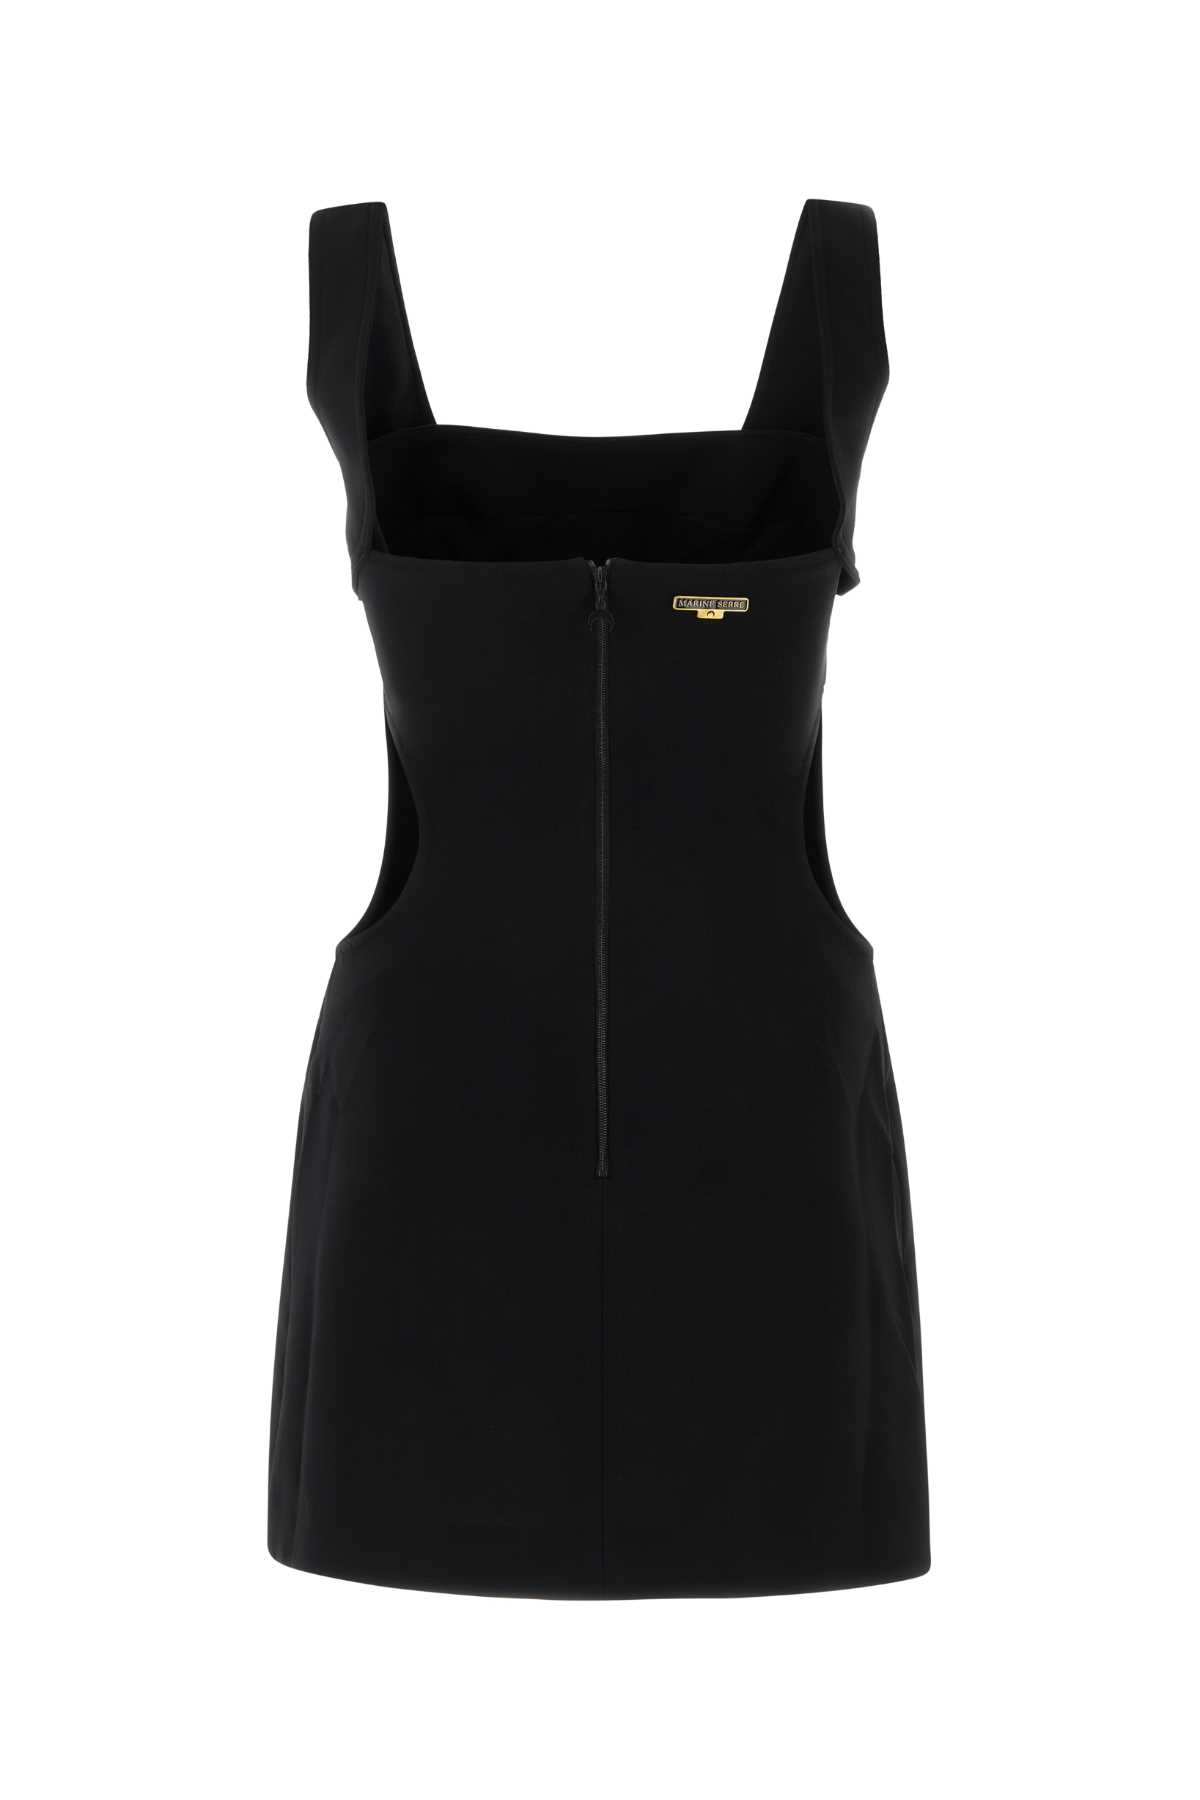 Marine Serre Black Polyester Blend Mini Dress